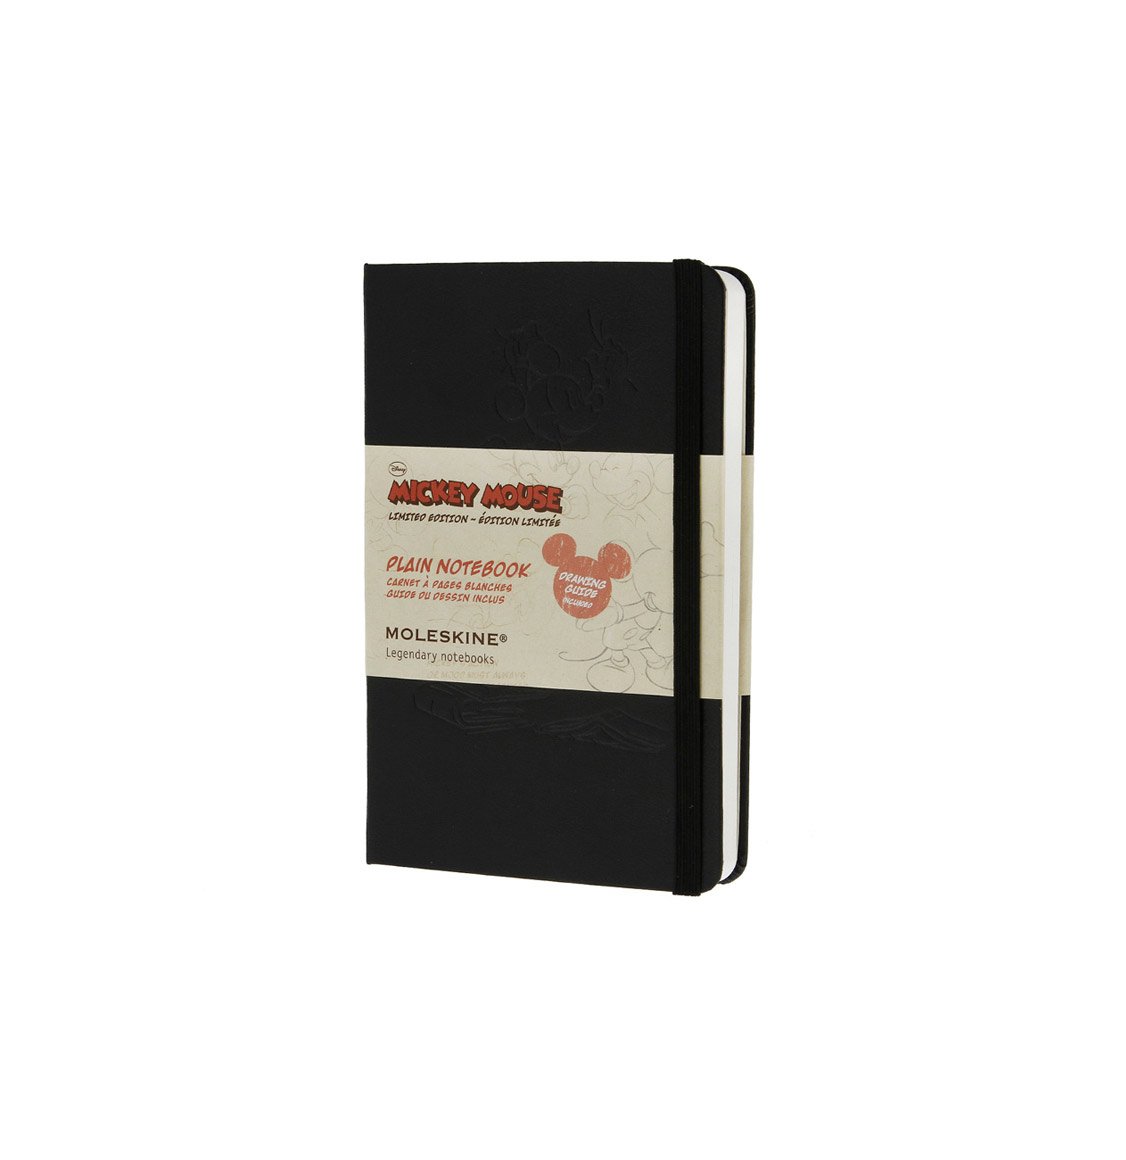 Moleskine Mickey Mouse Limited Edition Pocket Plain Notebook